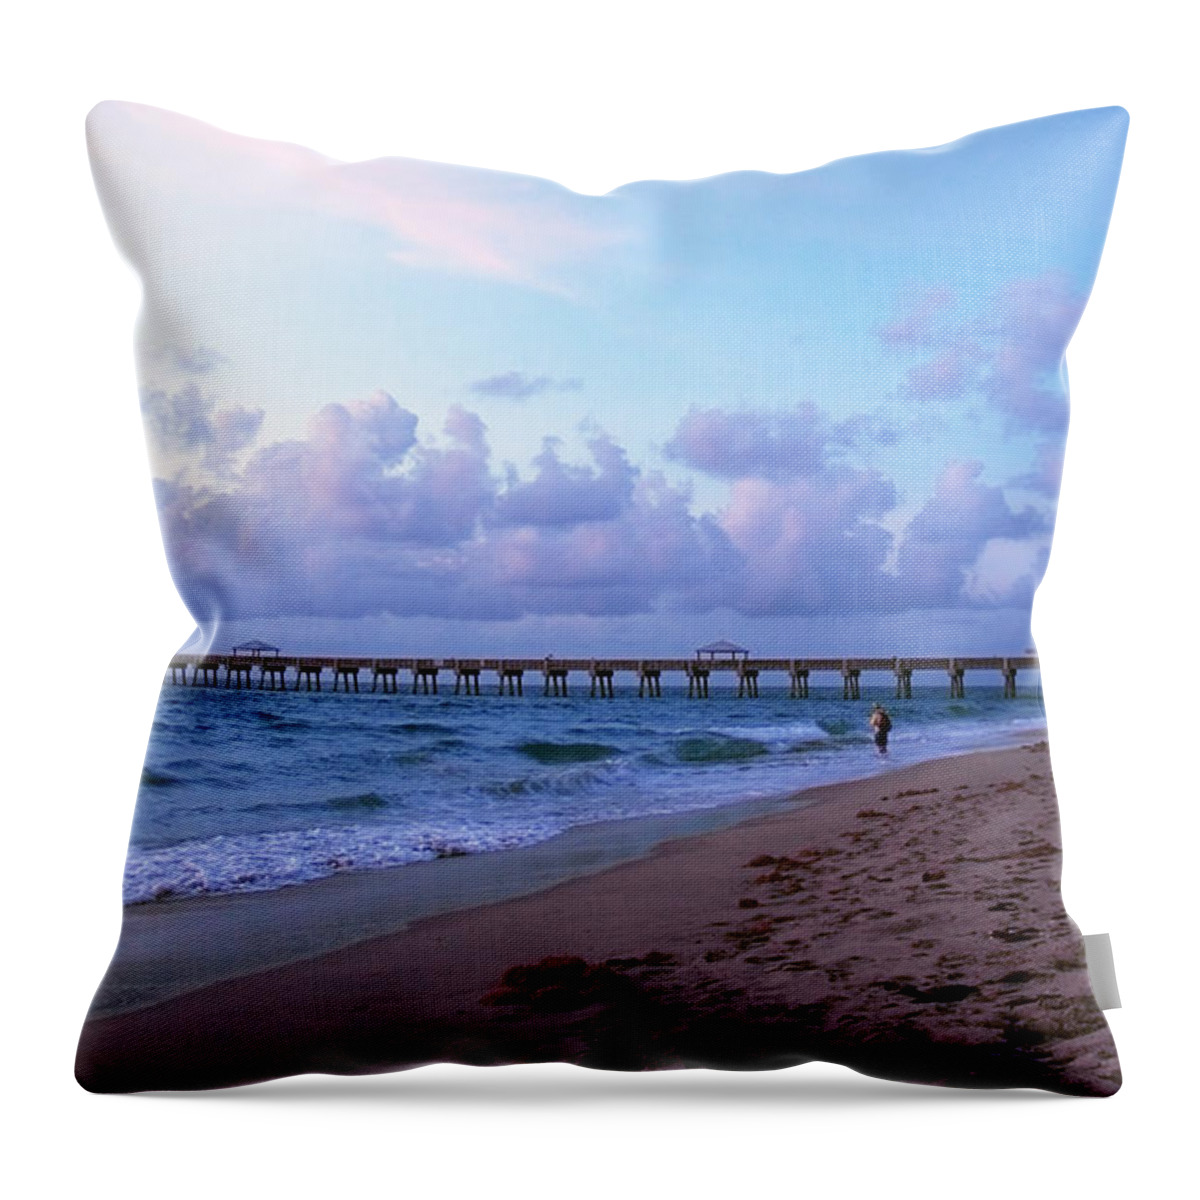 Sunrise Throw Pillow featuring the photograph Juno Beach Pier Florida Sunrise Seascape C7 by Ricardos Creations